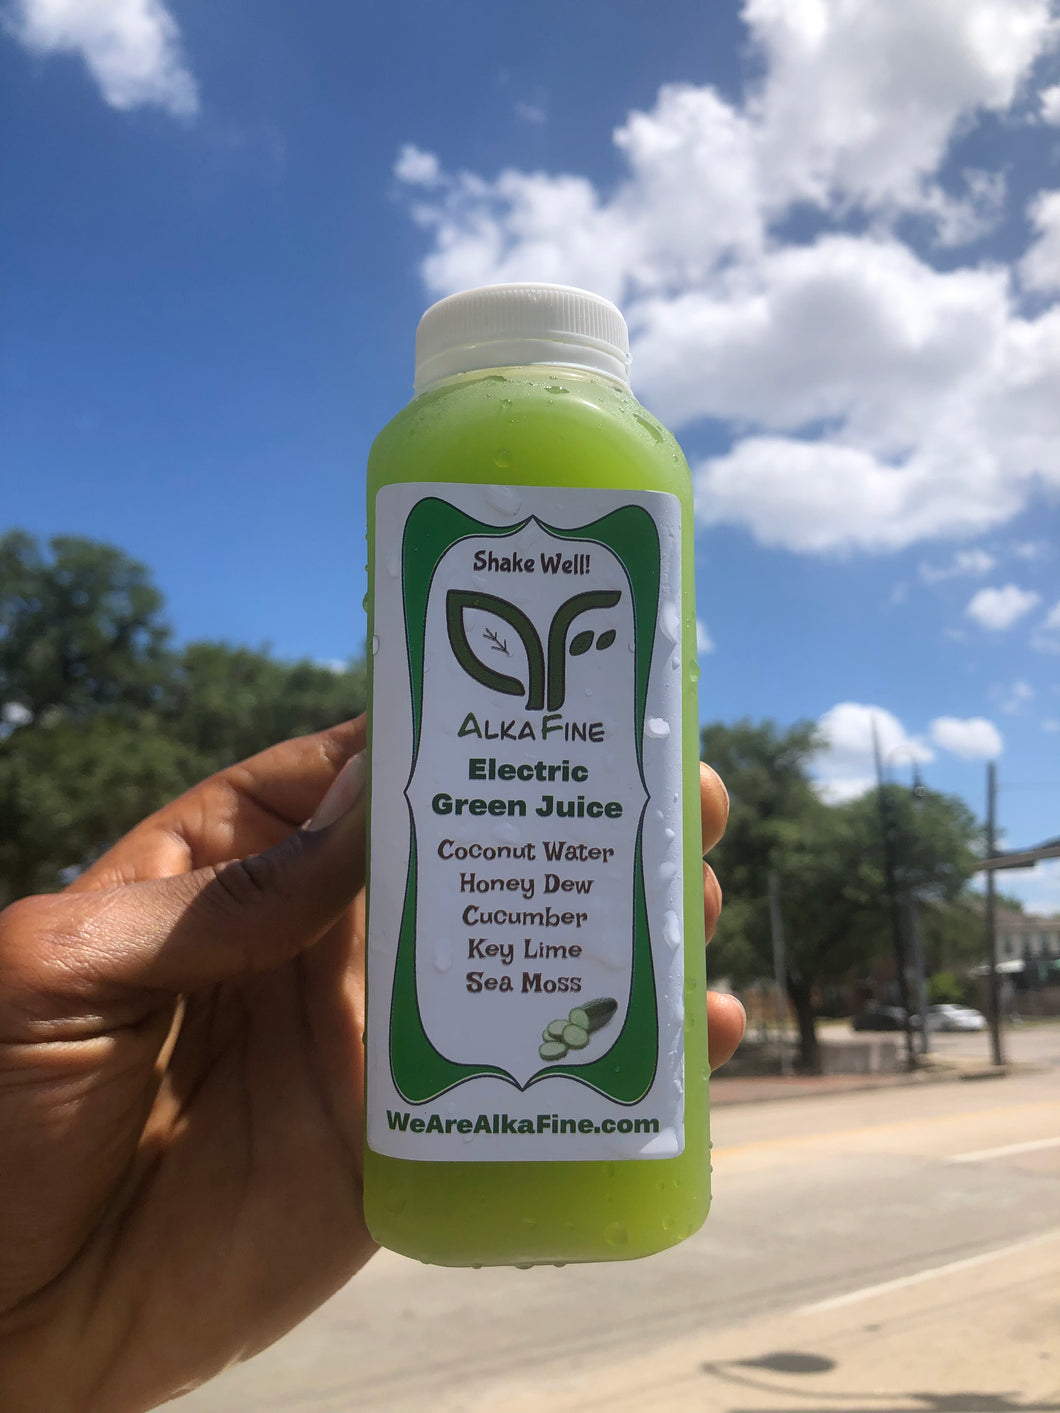 Electric Green Juice